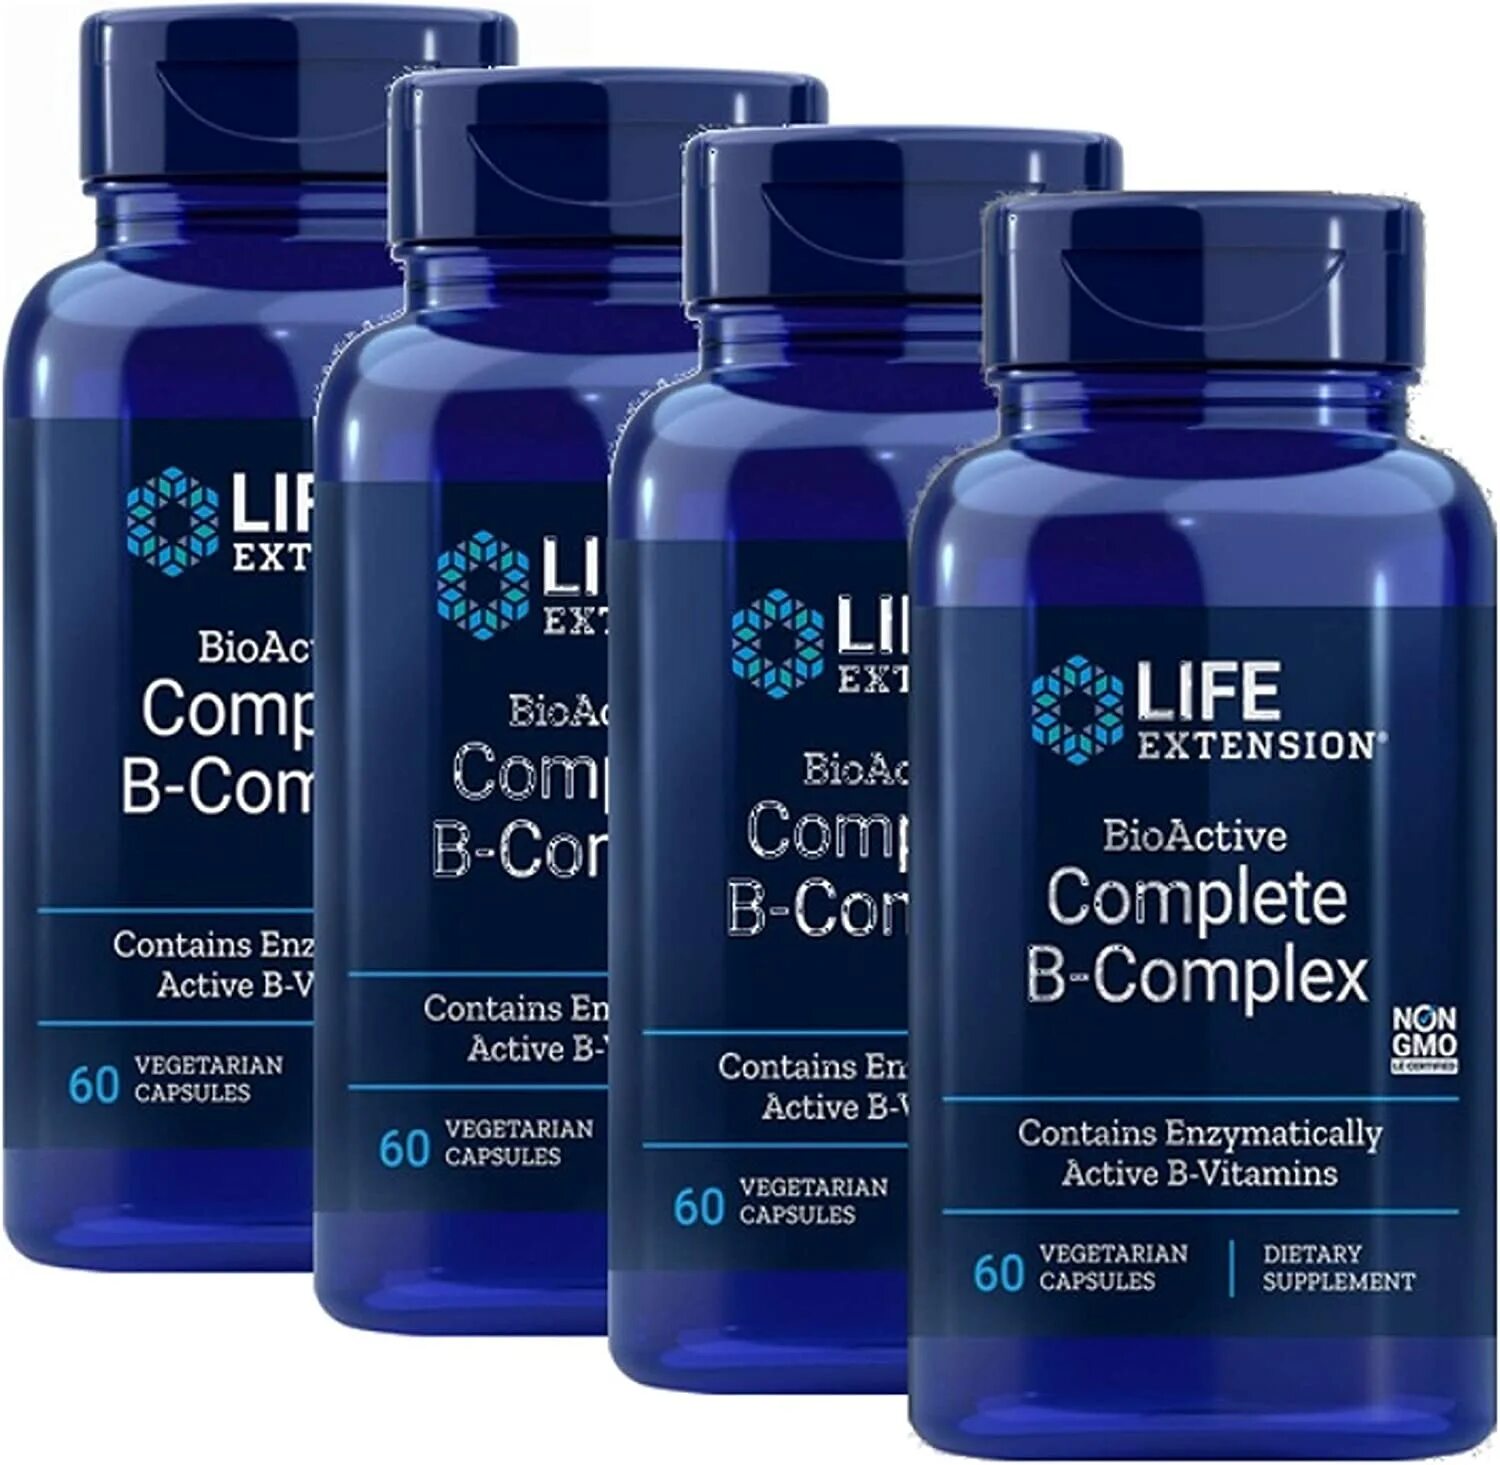 Life extension инструкция. Bioactive complete b-Complex 60 Vegetarian Capsules. B комплекс витамины Life Extension. Life Extension Bioactive complete b-Complex. Life Extension.